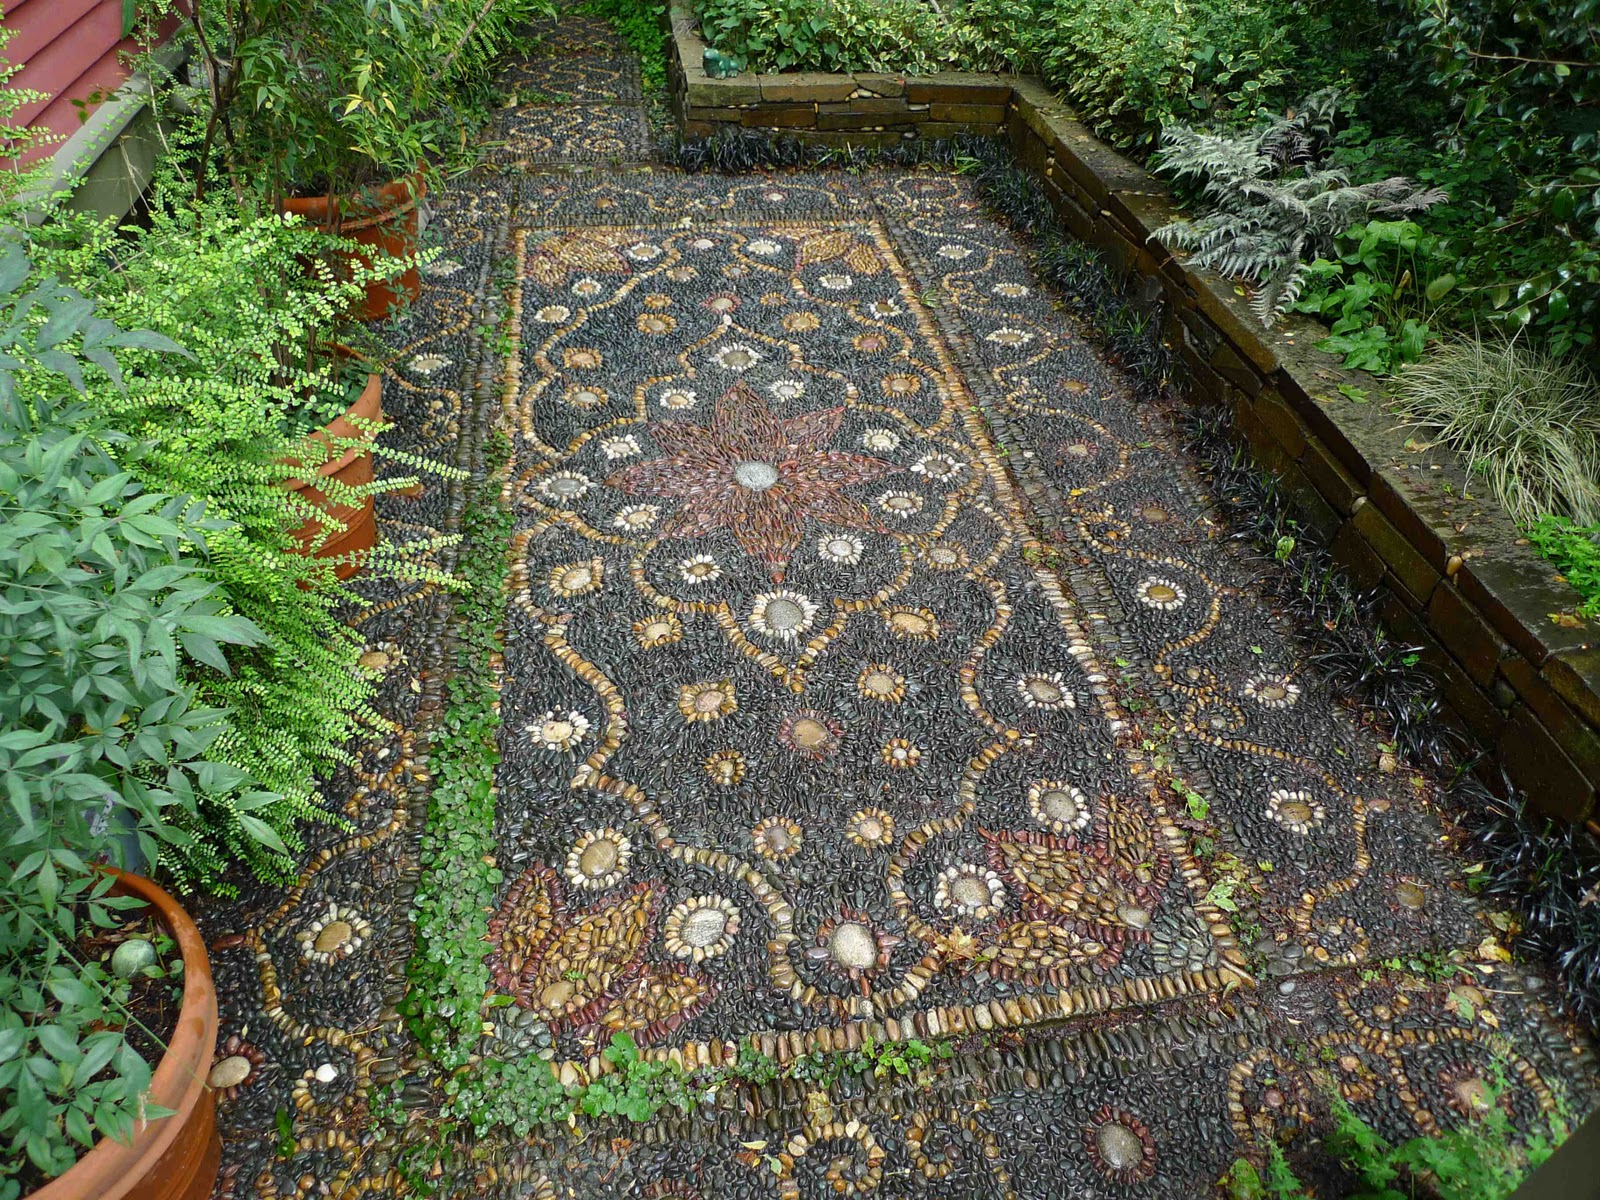 garden mosaic